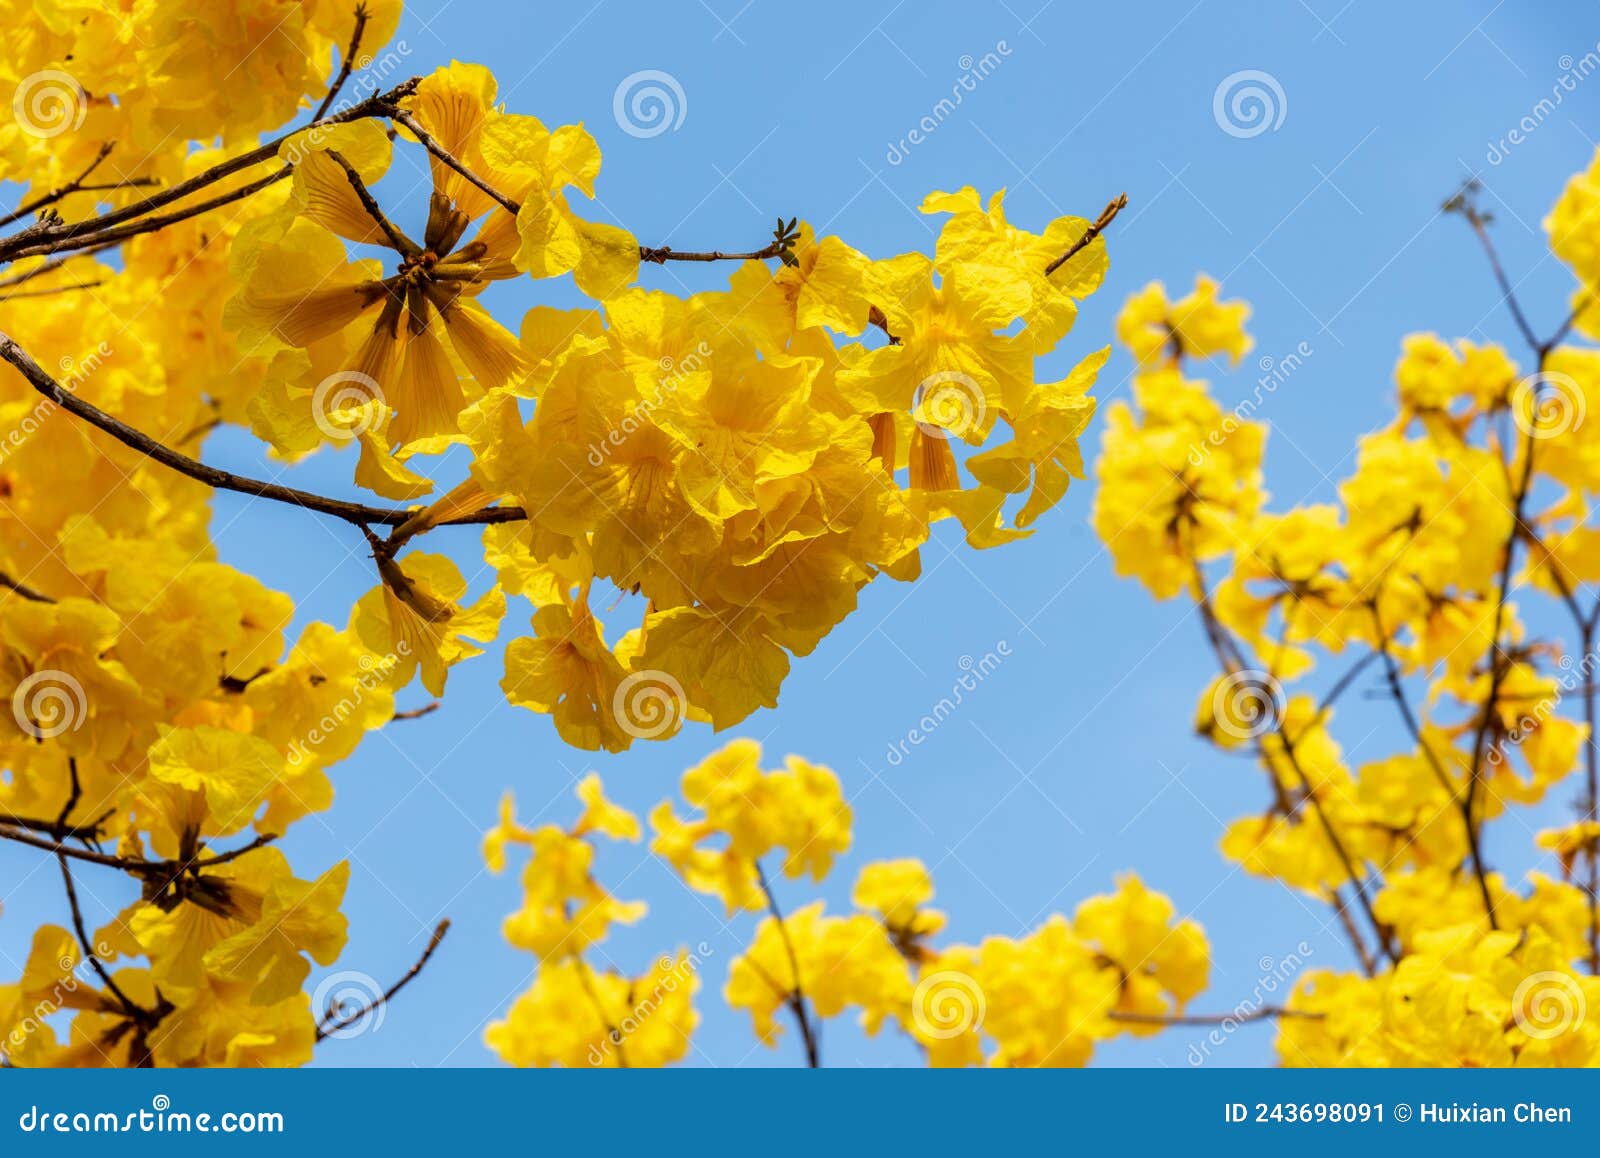 Golden Tabebuia Chrysotricha or Golden Trumpet Tree Bloom